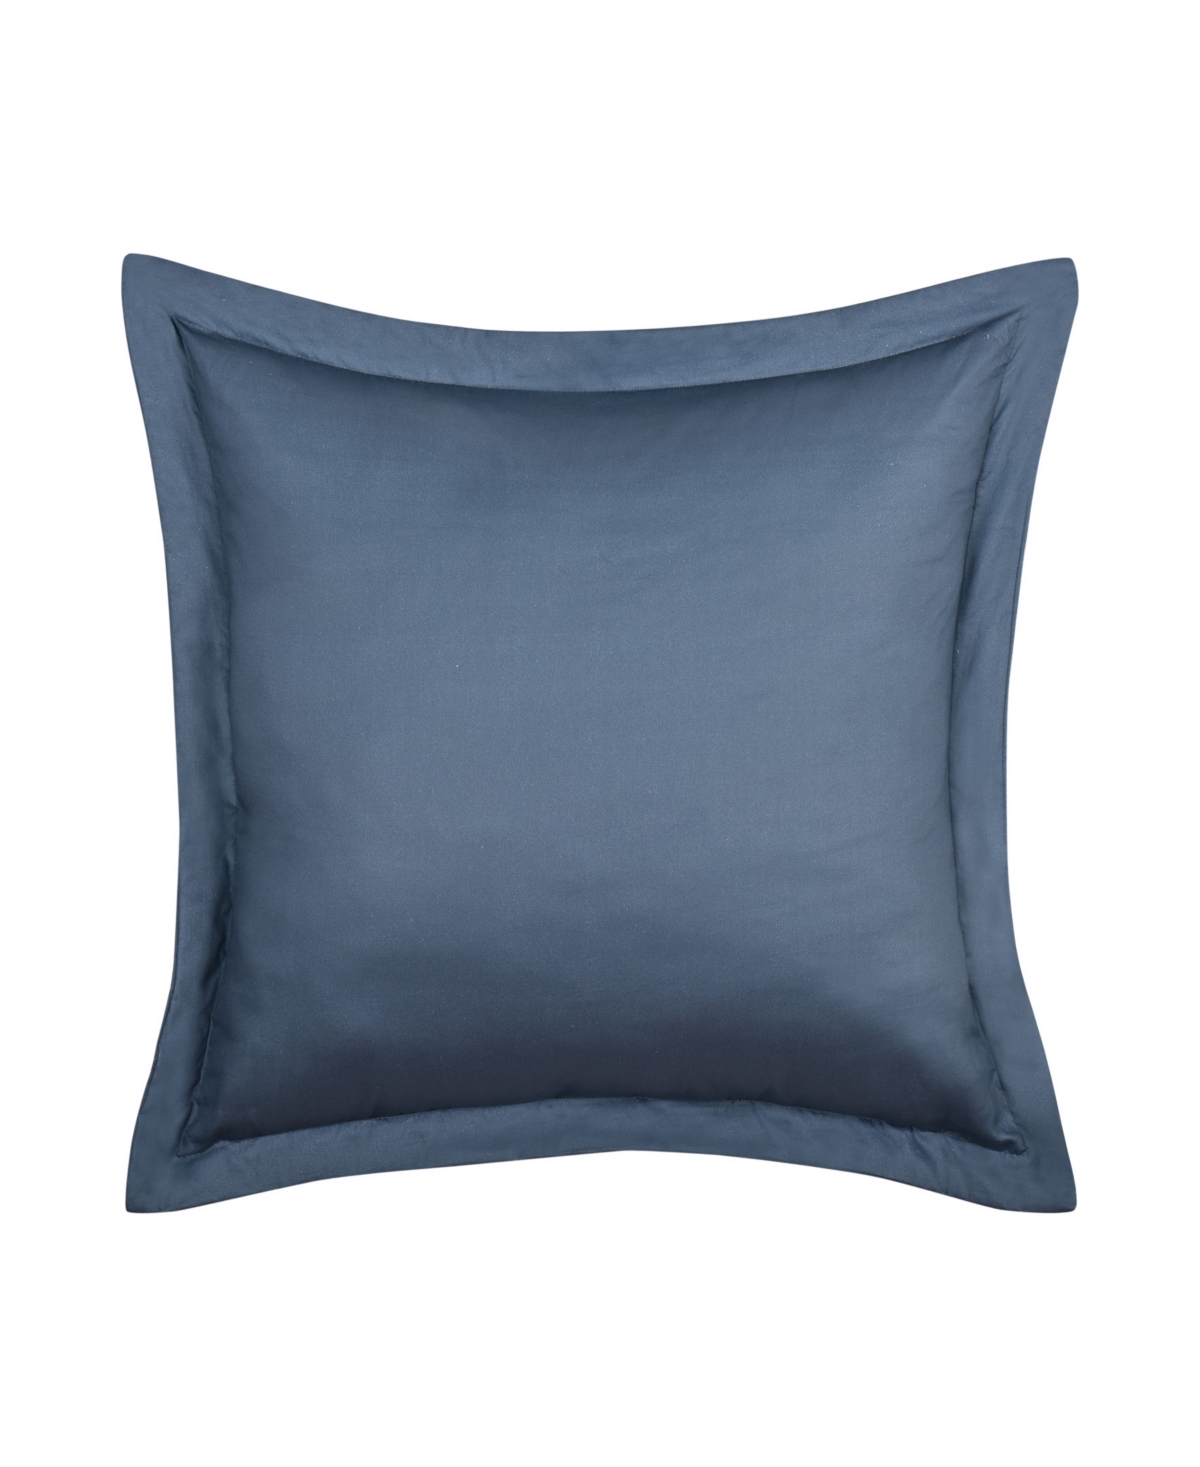 Piper & Wright Sara Square Decorative Pillow, 20" X 20" In Blue